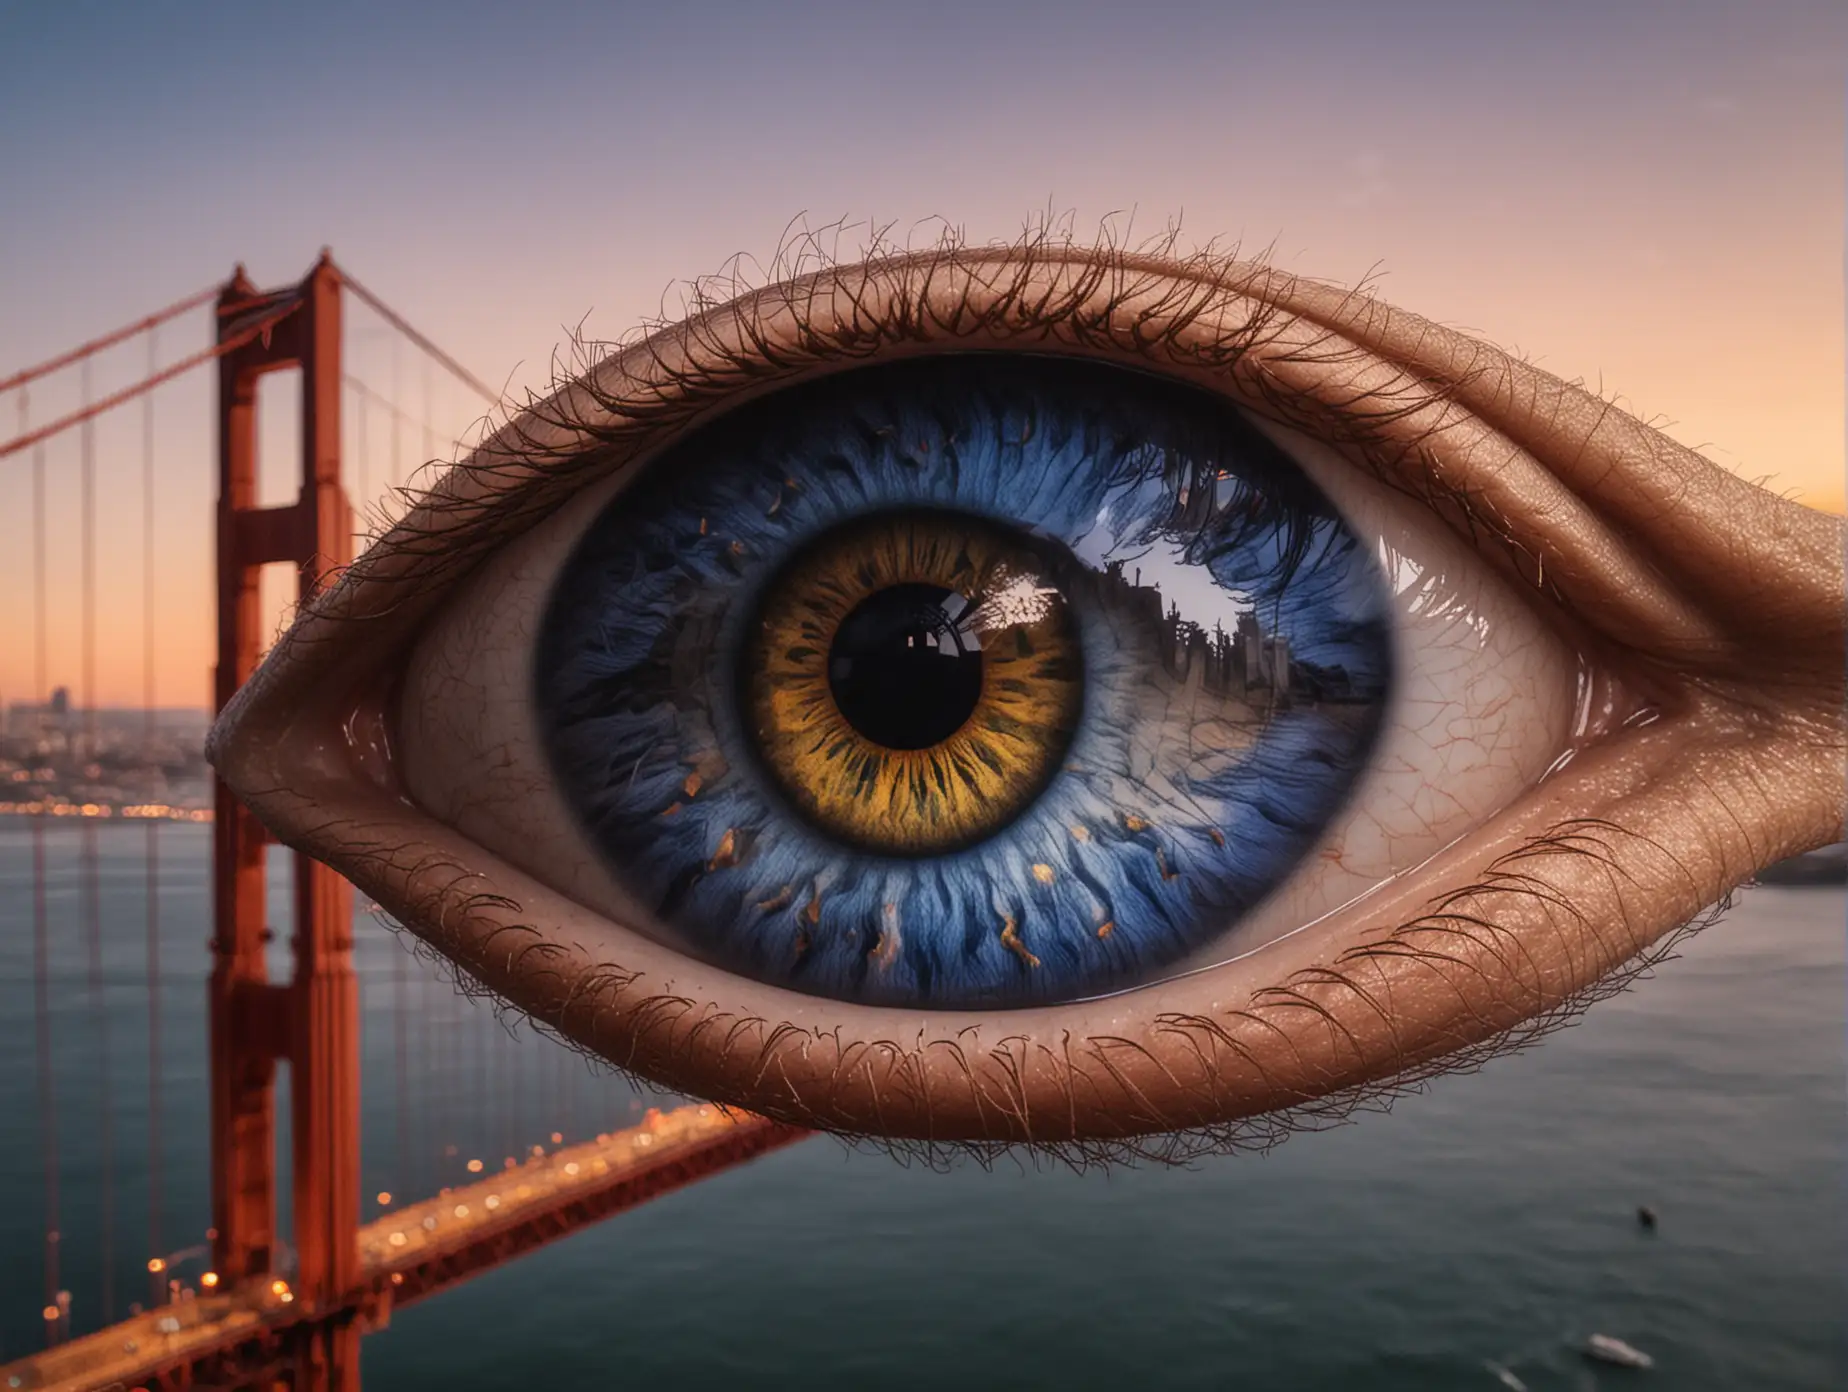 Majestic Giant Eye with Blue Iris over Golden Gate Bridge at Sunset